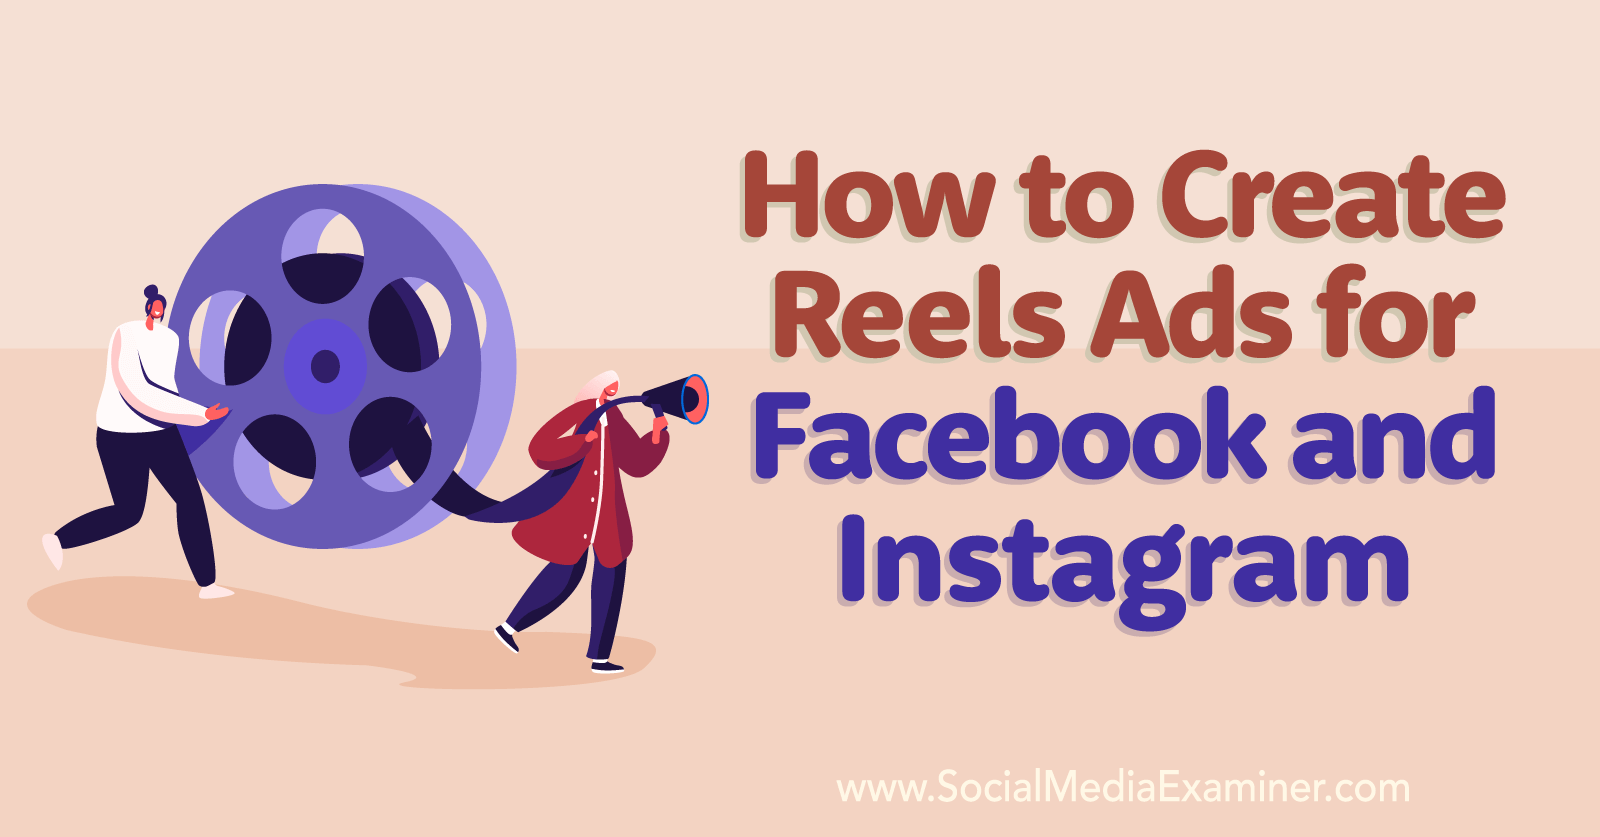 How to Hide Reels from Facebook Feed: 6 Simple Ways